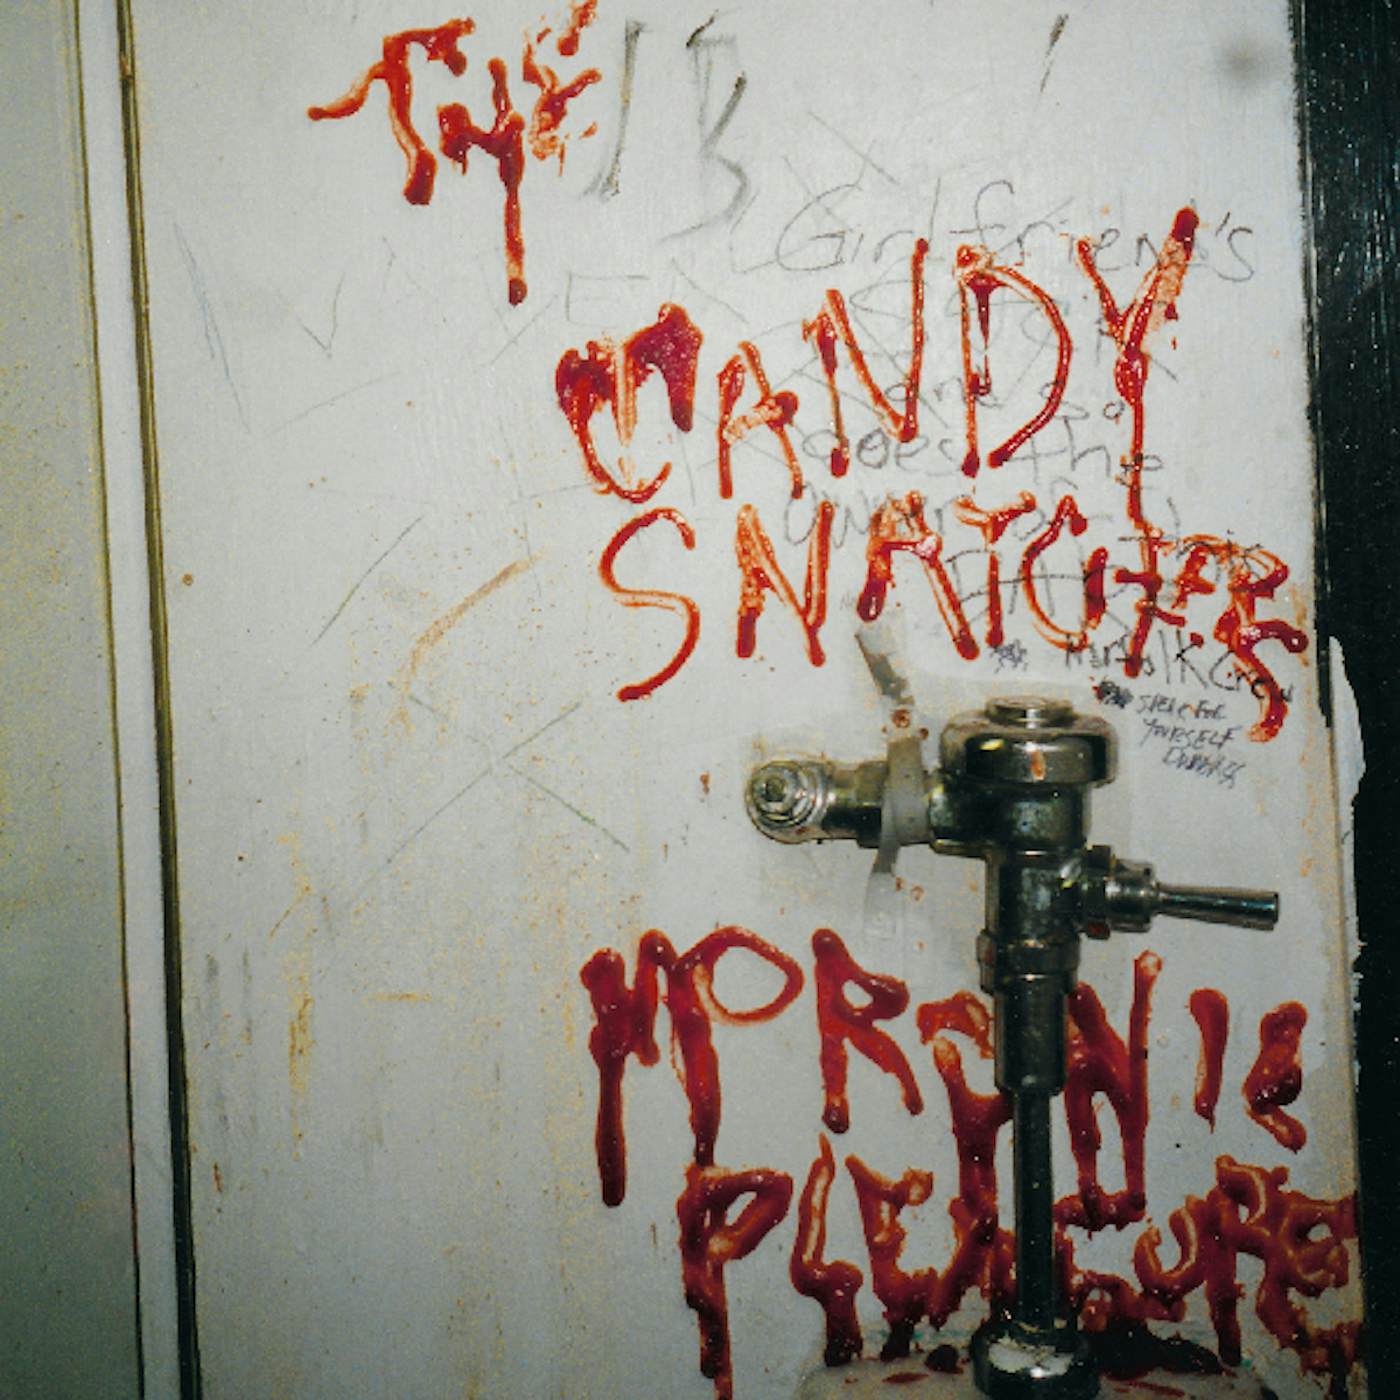 The Candy Snatchers Moronic Pleasures Vinyl Record